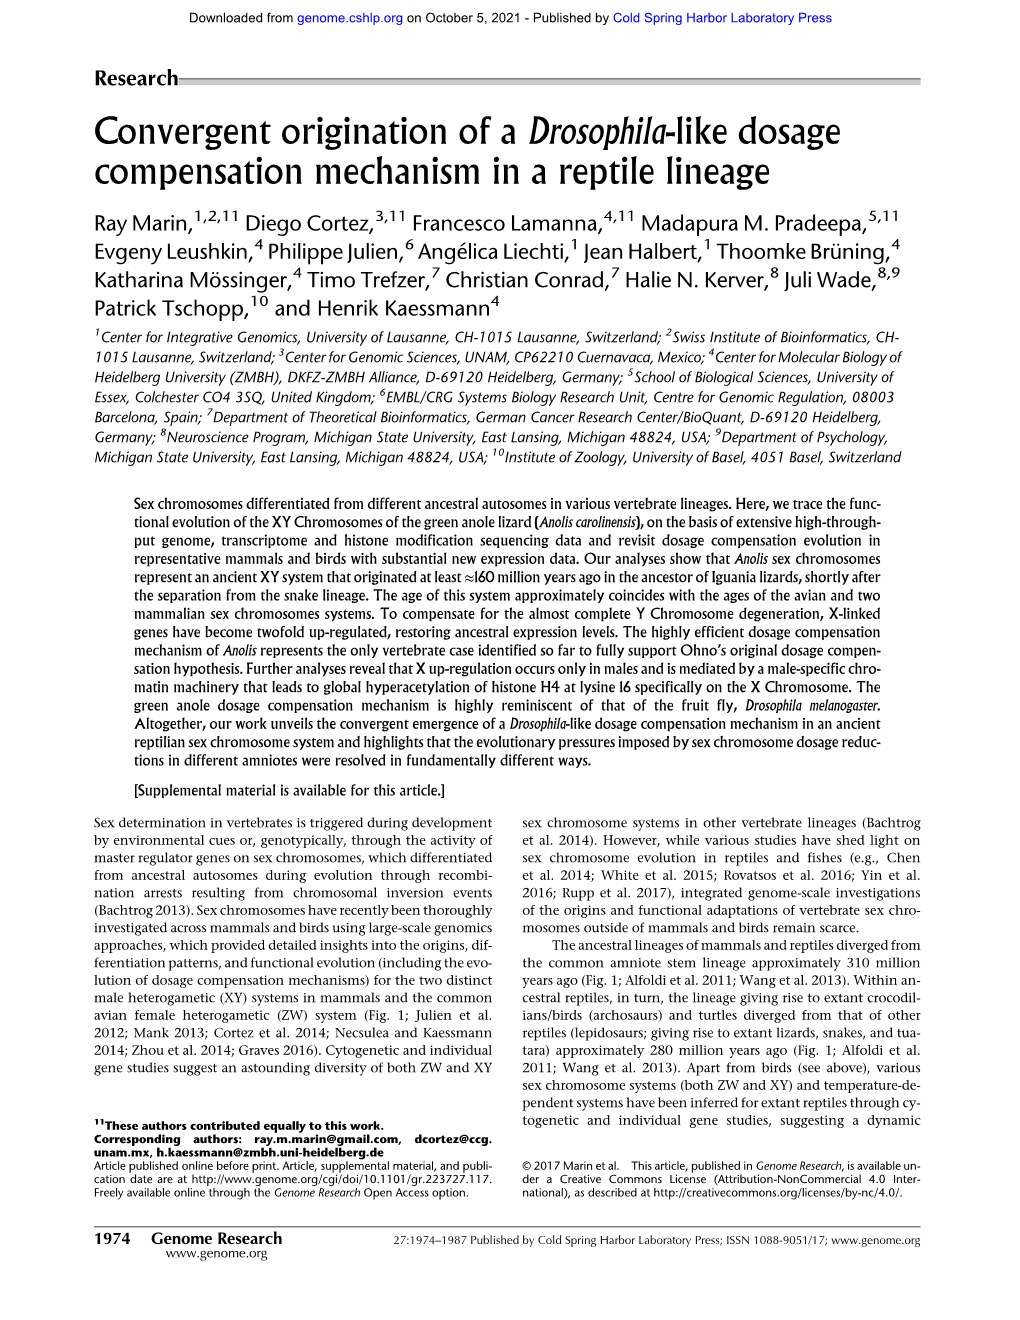 Convergent Origination of a Drosophila-Like Dosage Compensation Mechanism in a Reptile Lineage